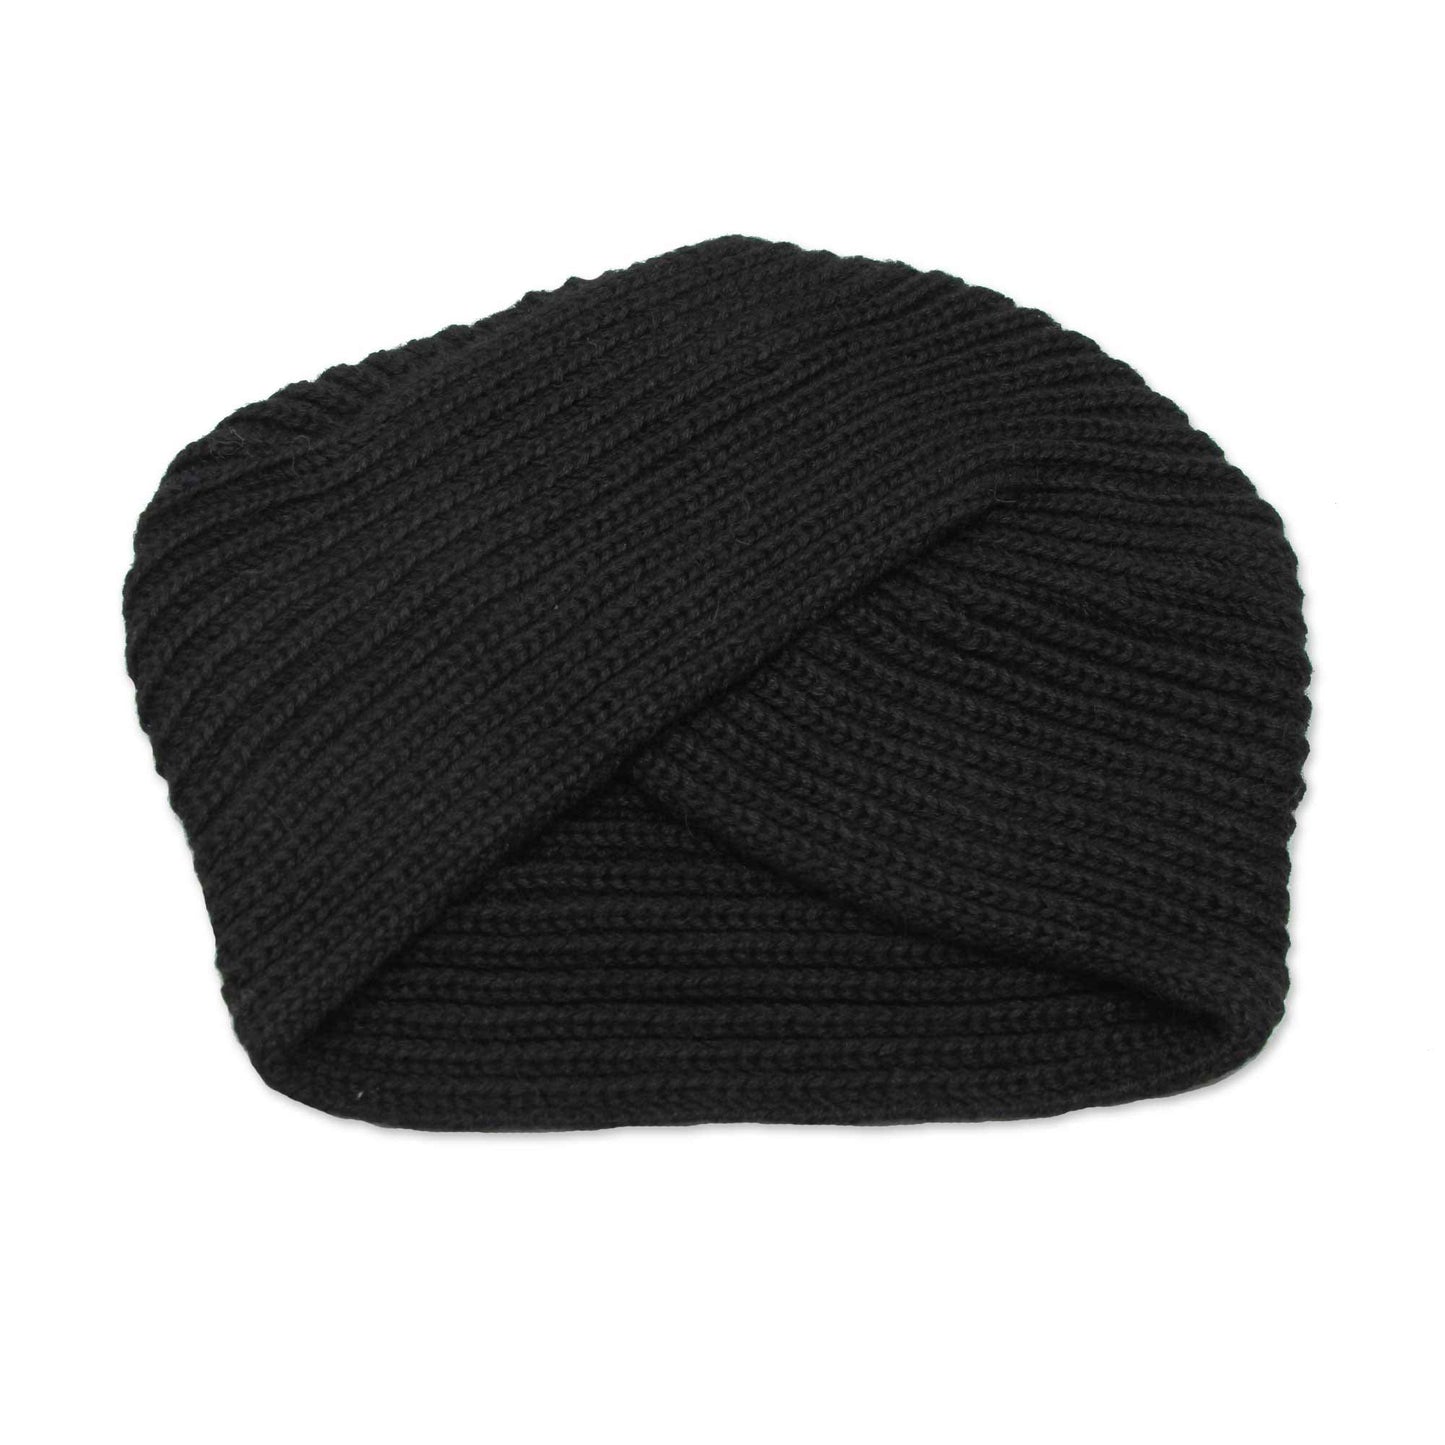 EbonyTurban Knitted Alpaca Blend Black Turban Style Hat from Peru